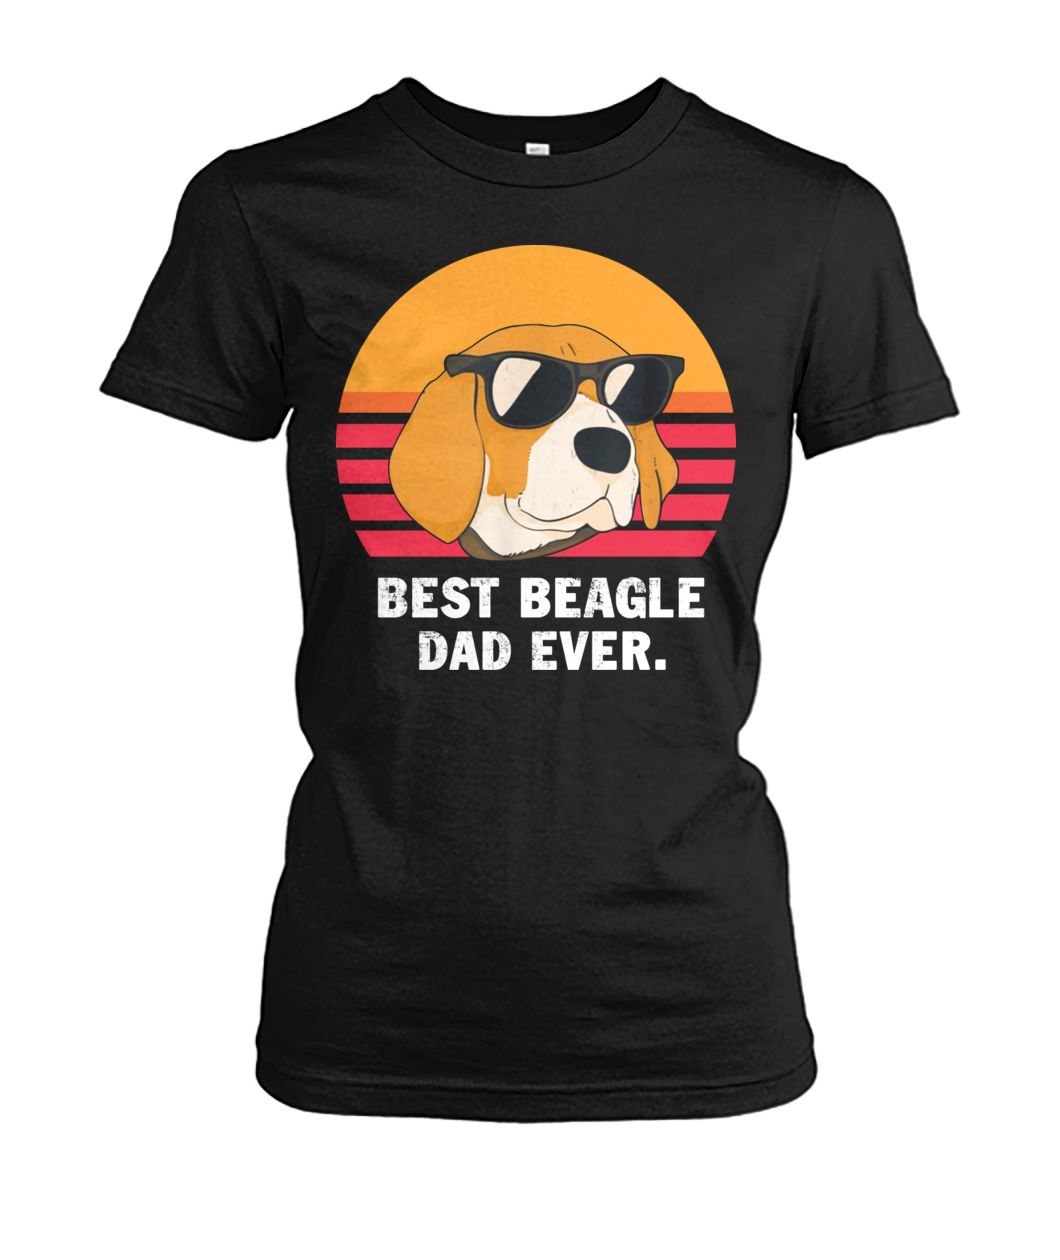 Vintage best beagle dad ever women's crew tee